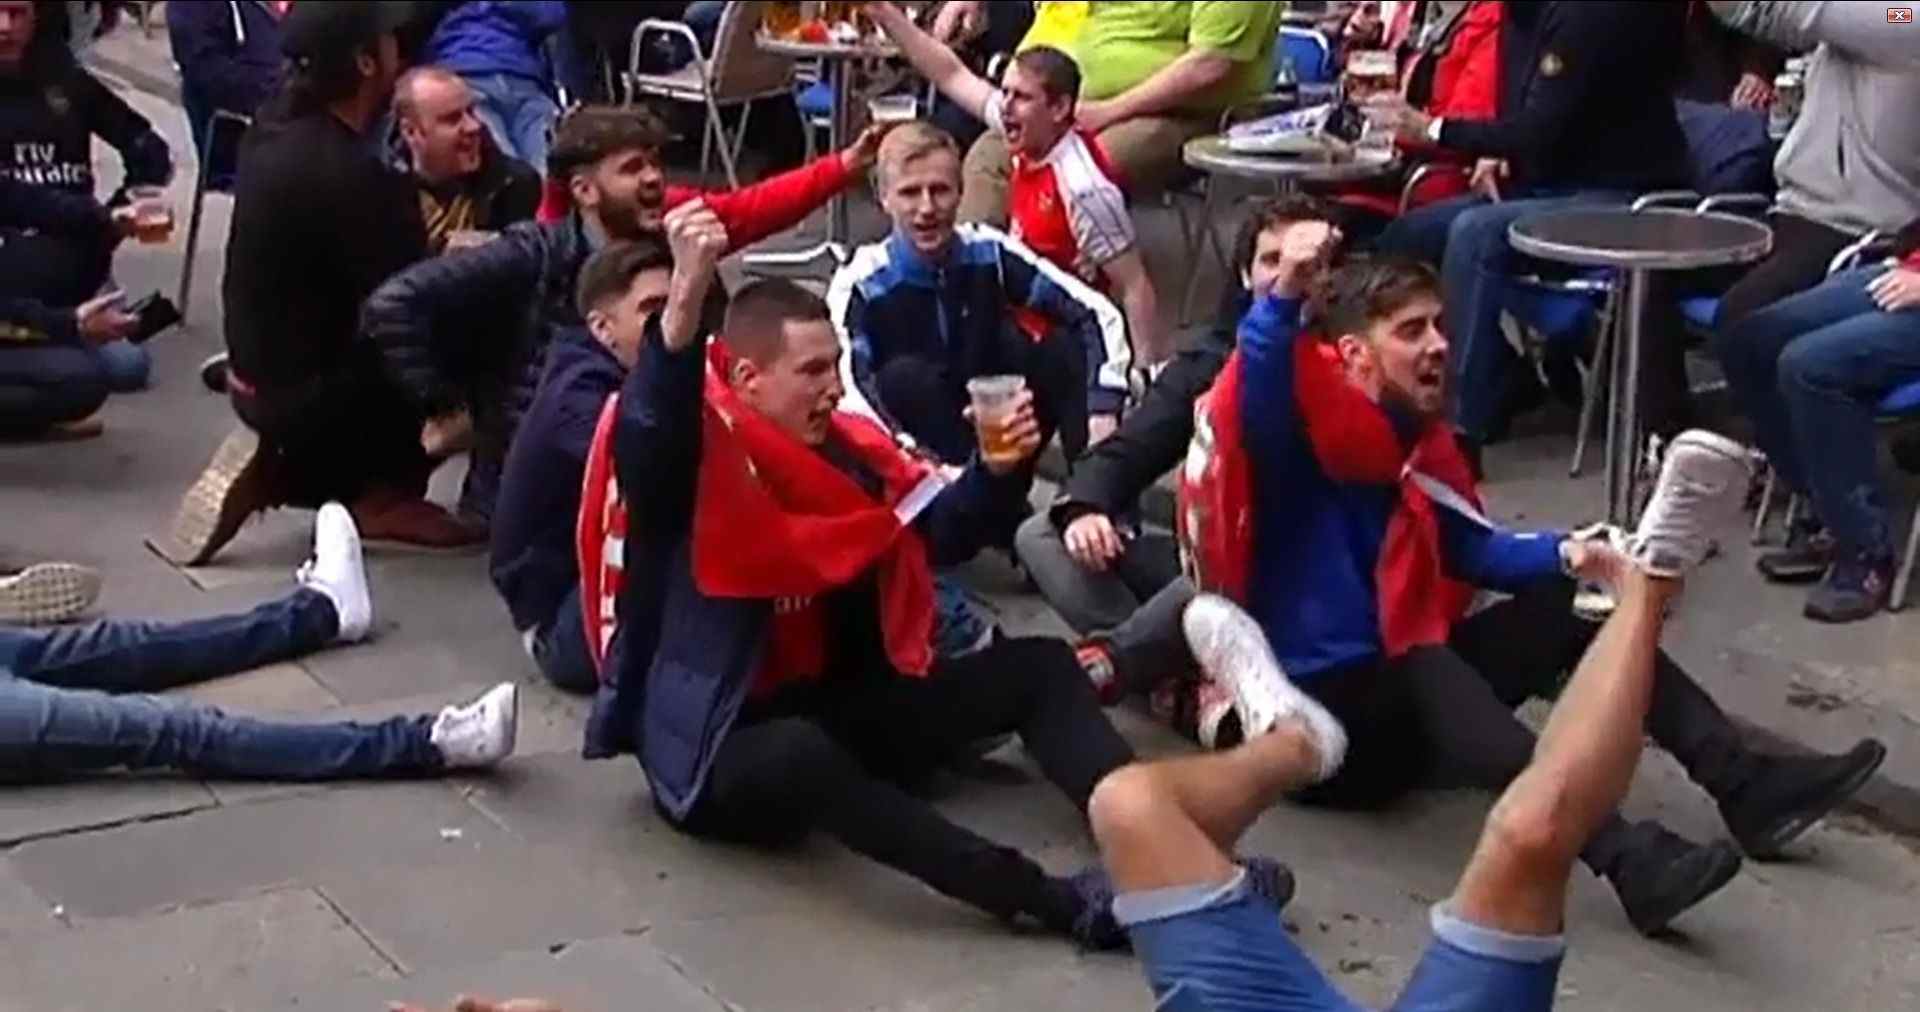 'Hooligans' del Arsenal se mofan de indigentes en Barcelona